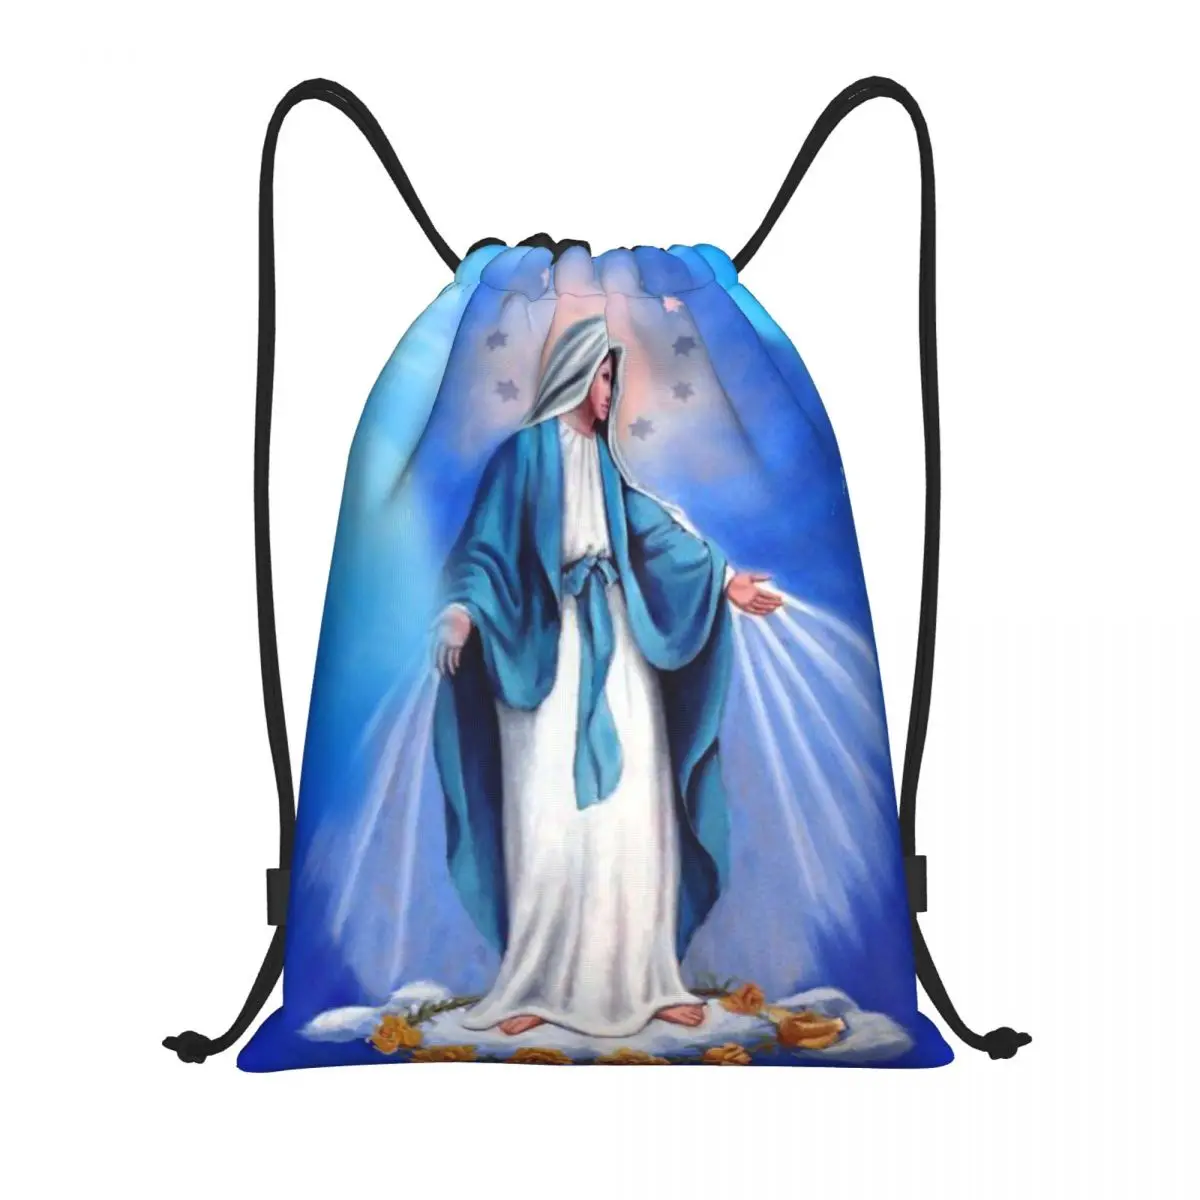 Catholic Virgin Mary Drawstring Backpack Women Men Gym Sport Sackpack Foldable Our Lady of Fatima Shopping Bag Sack